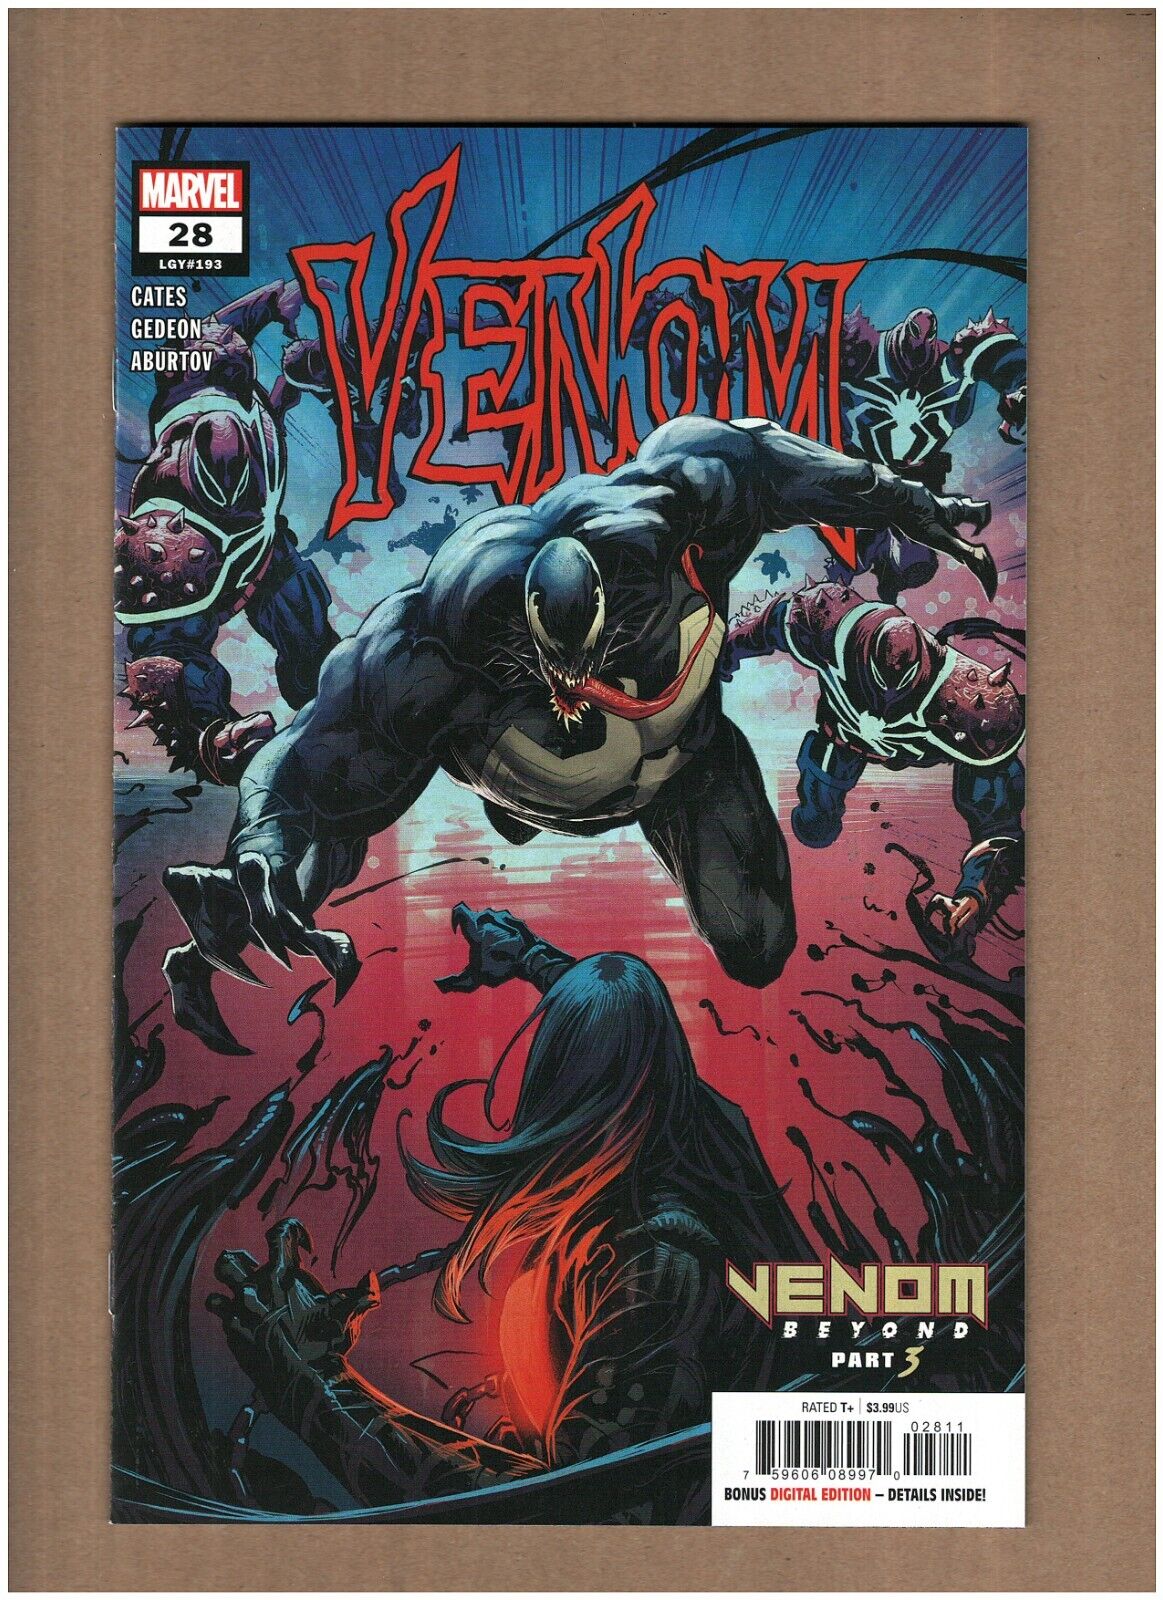 Venom #28 Marvel Comics 2020 Venom Beyond NM- 9.2